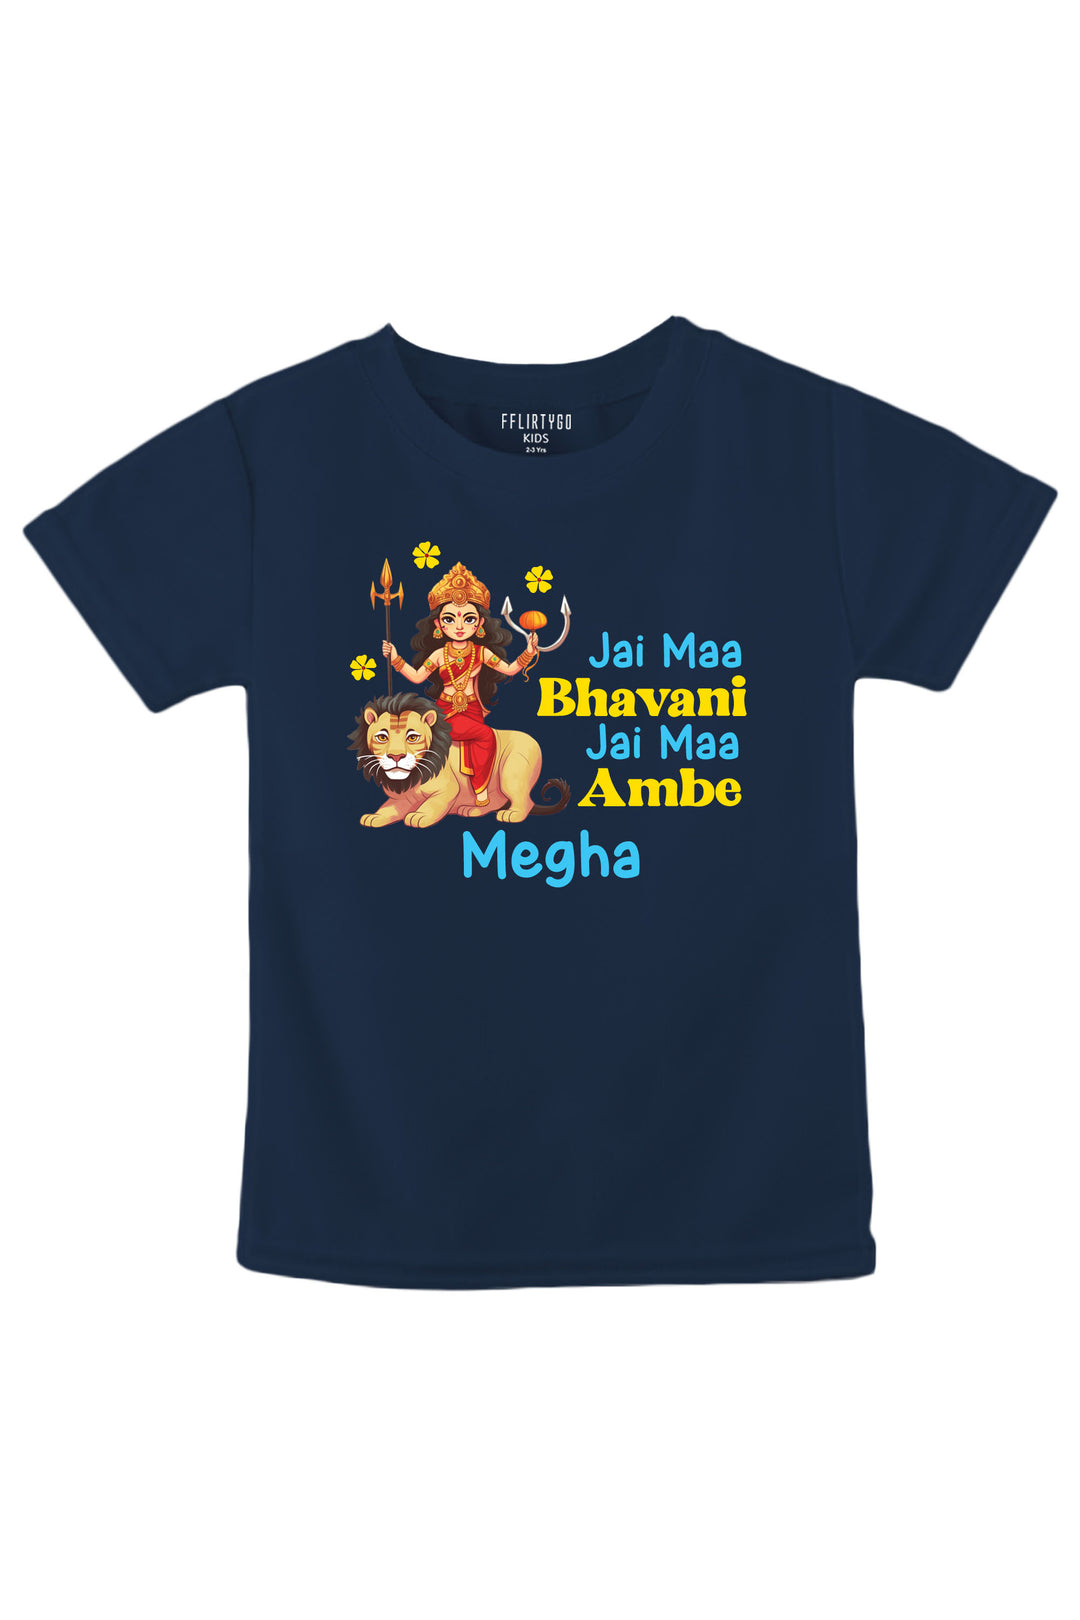 Jai Maa Bhavani Jai Maa Ambe Kids T Shirt w/ Custom Name